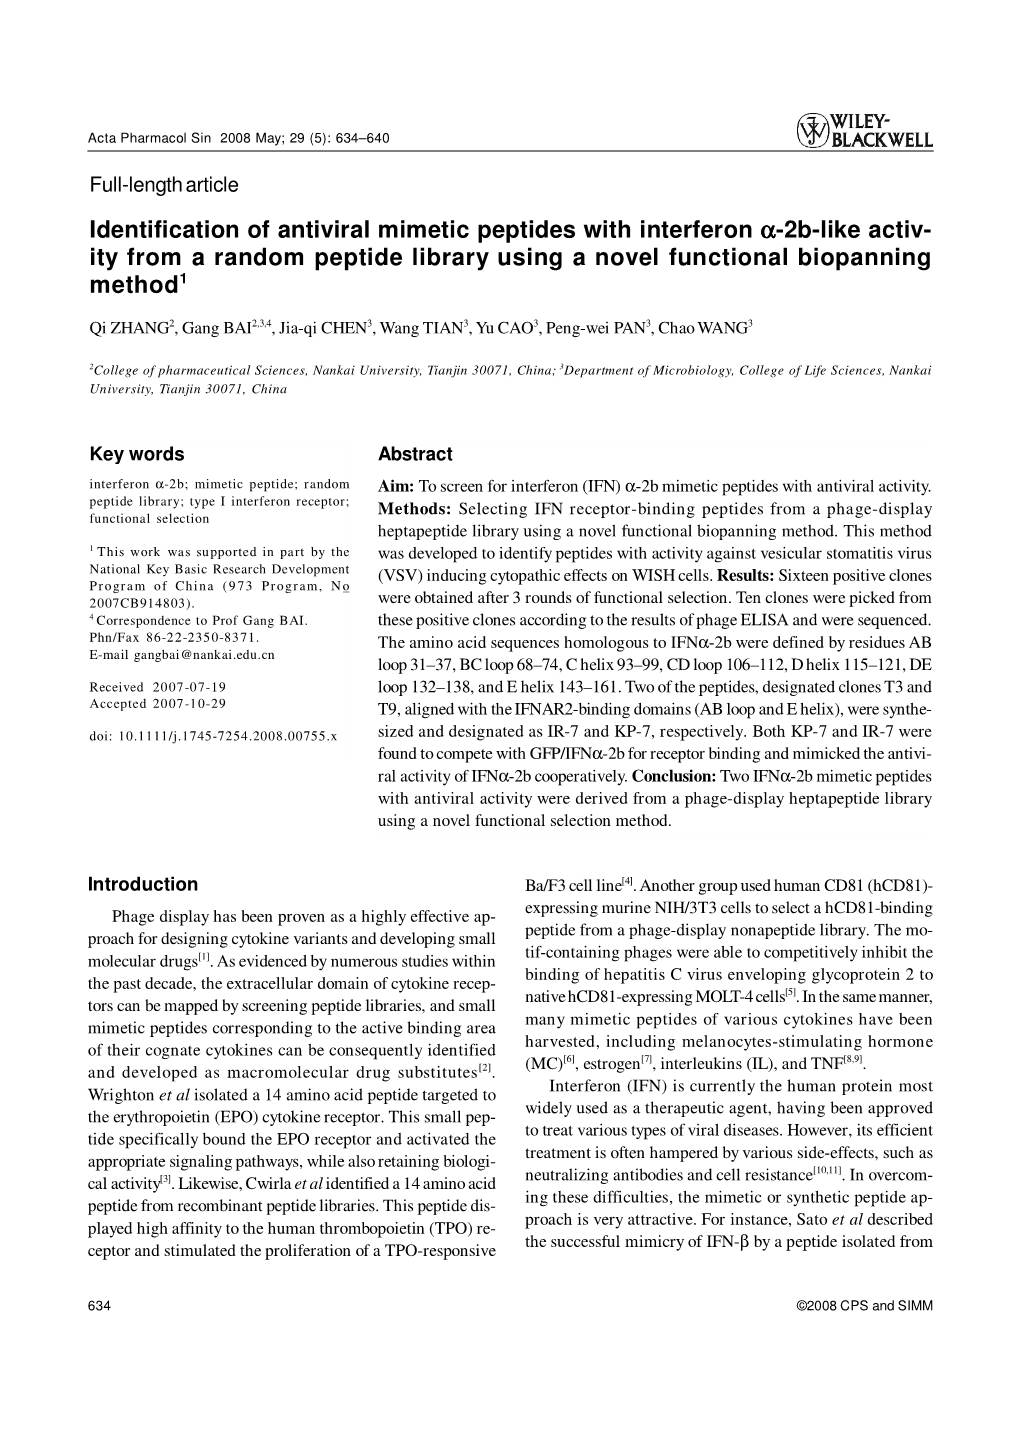 Identification of Antiviral Mimetic Peptides with Interferon Α-2B-Like